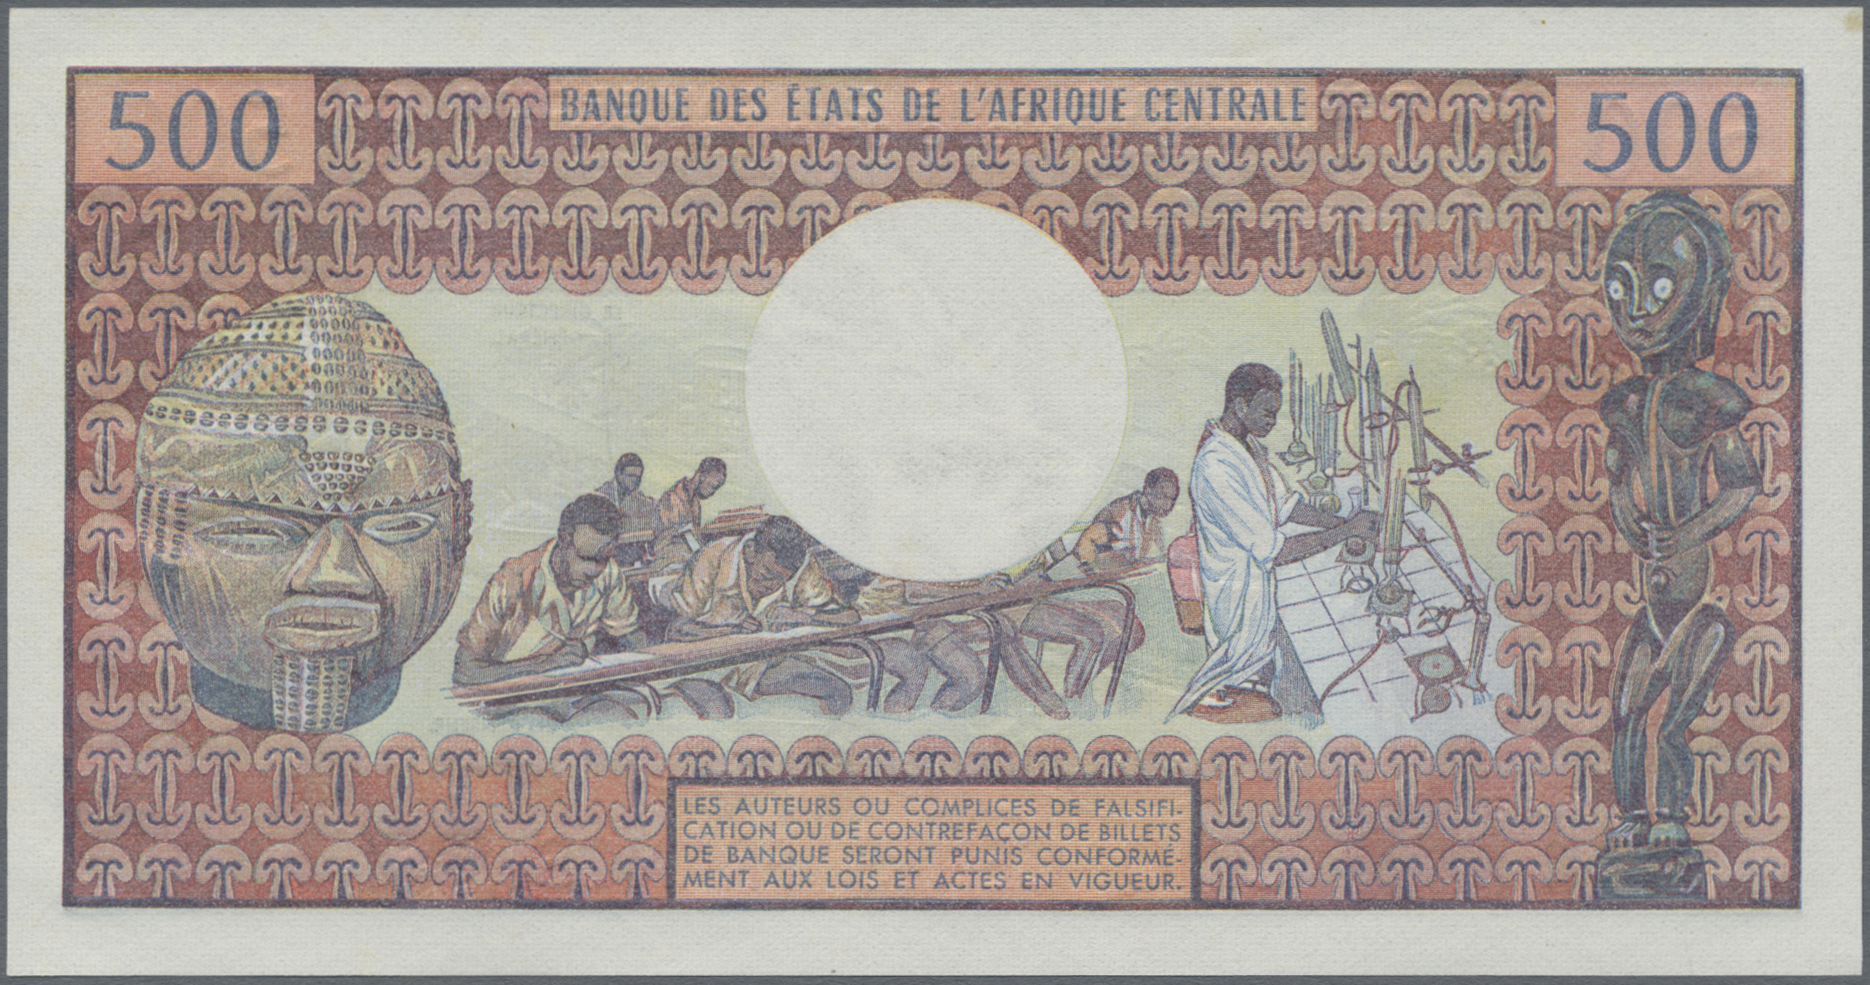 Lot 00245 - Cameroon / Kamerun | Banknoten  -  Auktionshaus Christoph Gärtner GmbH & Co. KG 56th AUCTION - Day 1